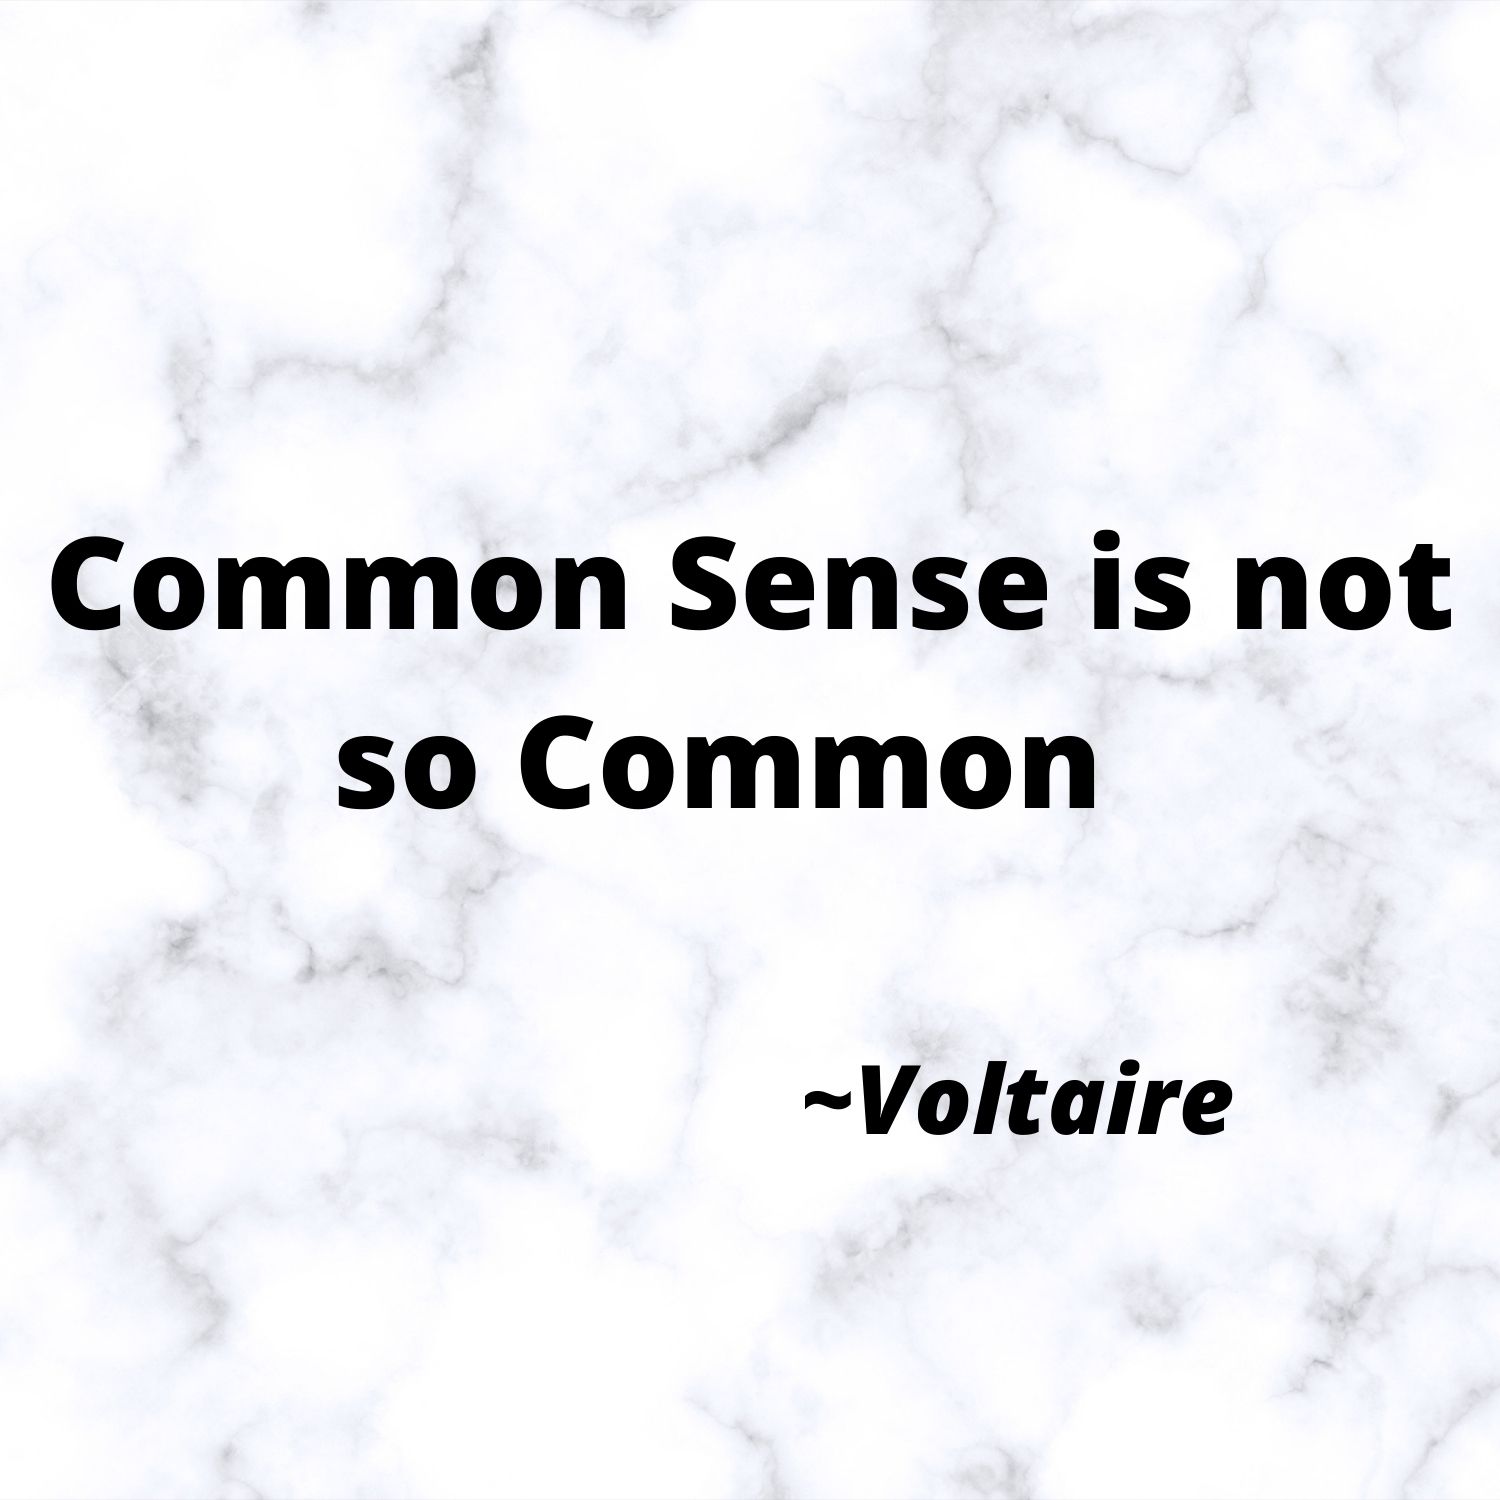 Covid and the Loss of Common Sense